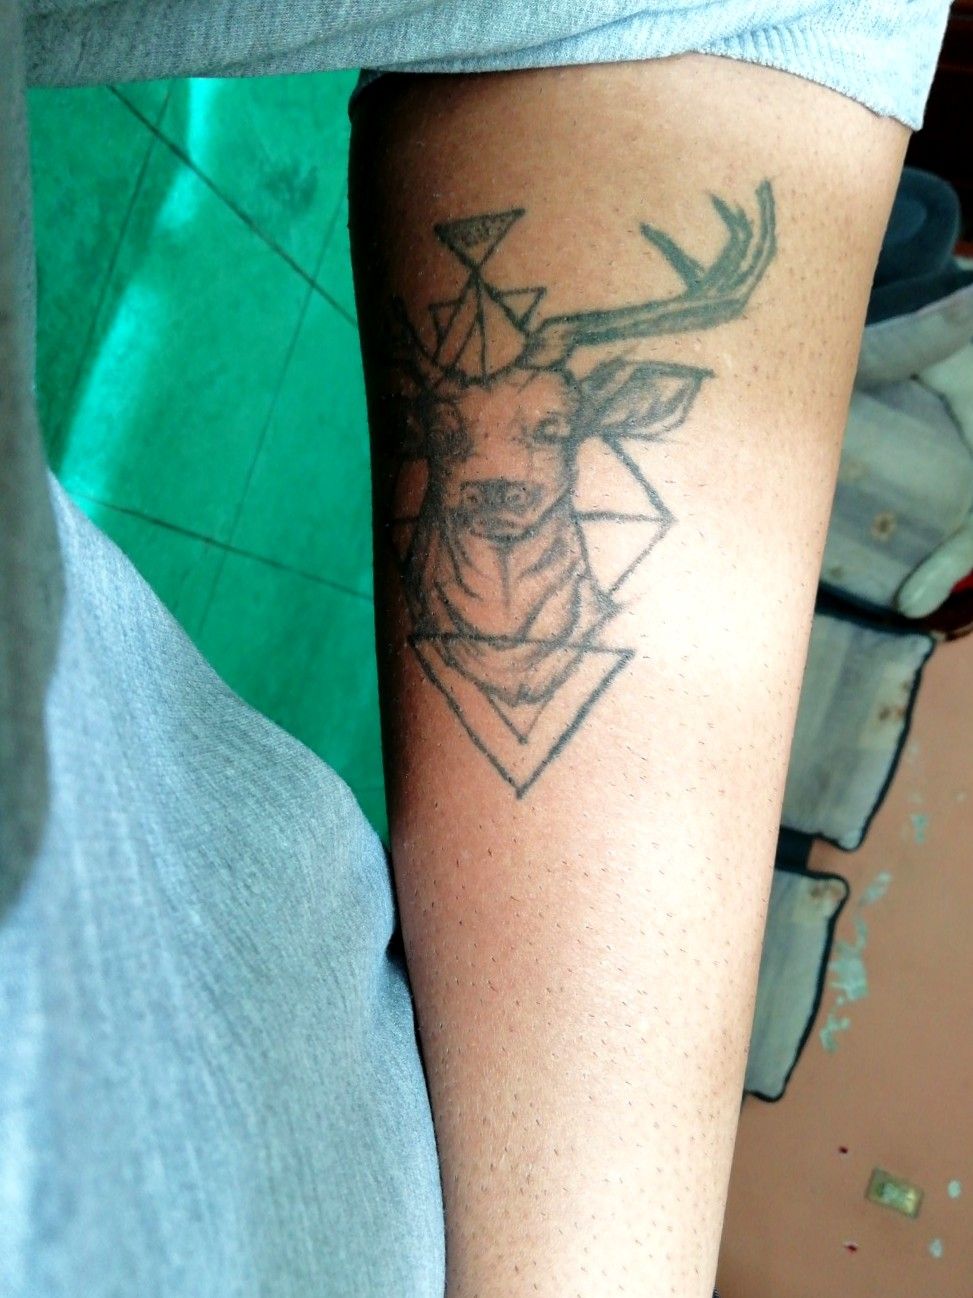 Tattoo uploaded by Alan Gonzalez • Mi tattoo quiero taparlo • Tattoodo